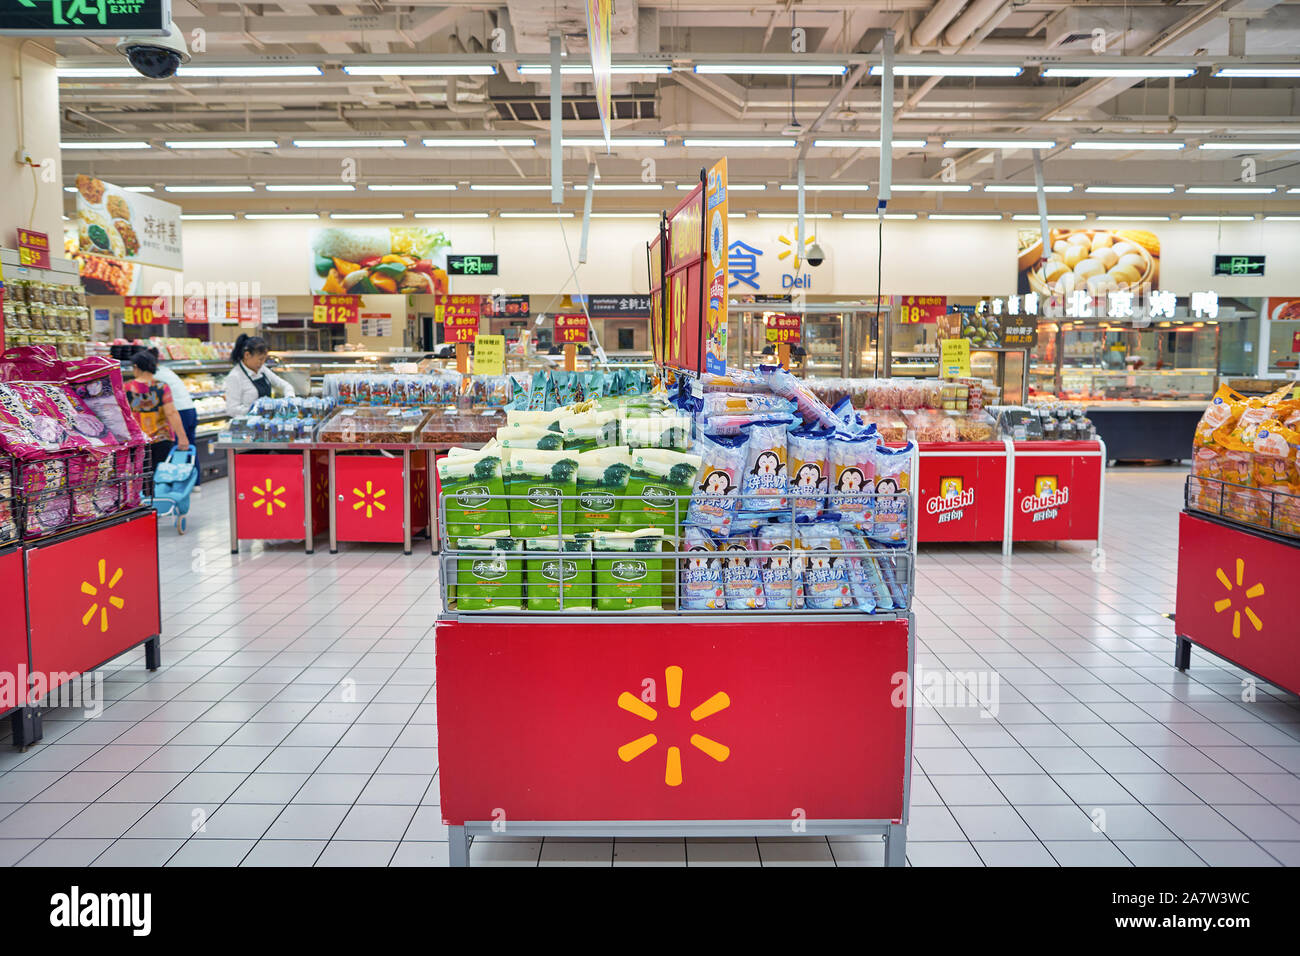 SHENZHEN, CHINA - CIRCA APRIL, 2019: interior shot of Walmart store in Shenzhen, China. Stock Photo